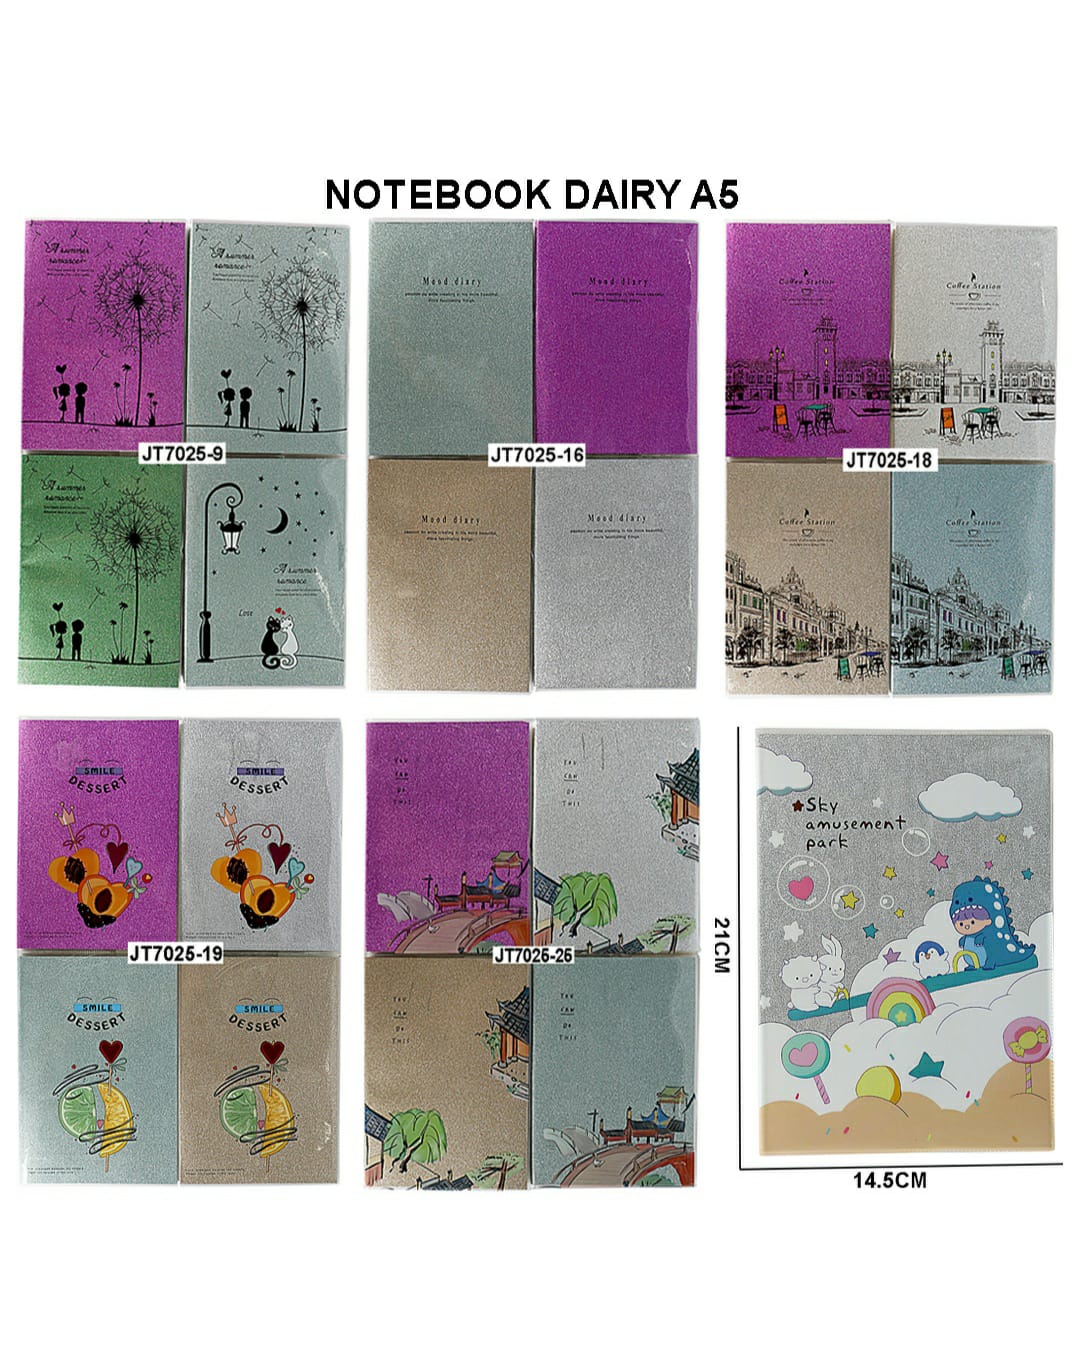 Notebook Dairy A5 Raw1621A5 | INKARTO